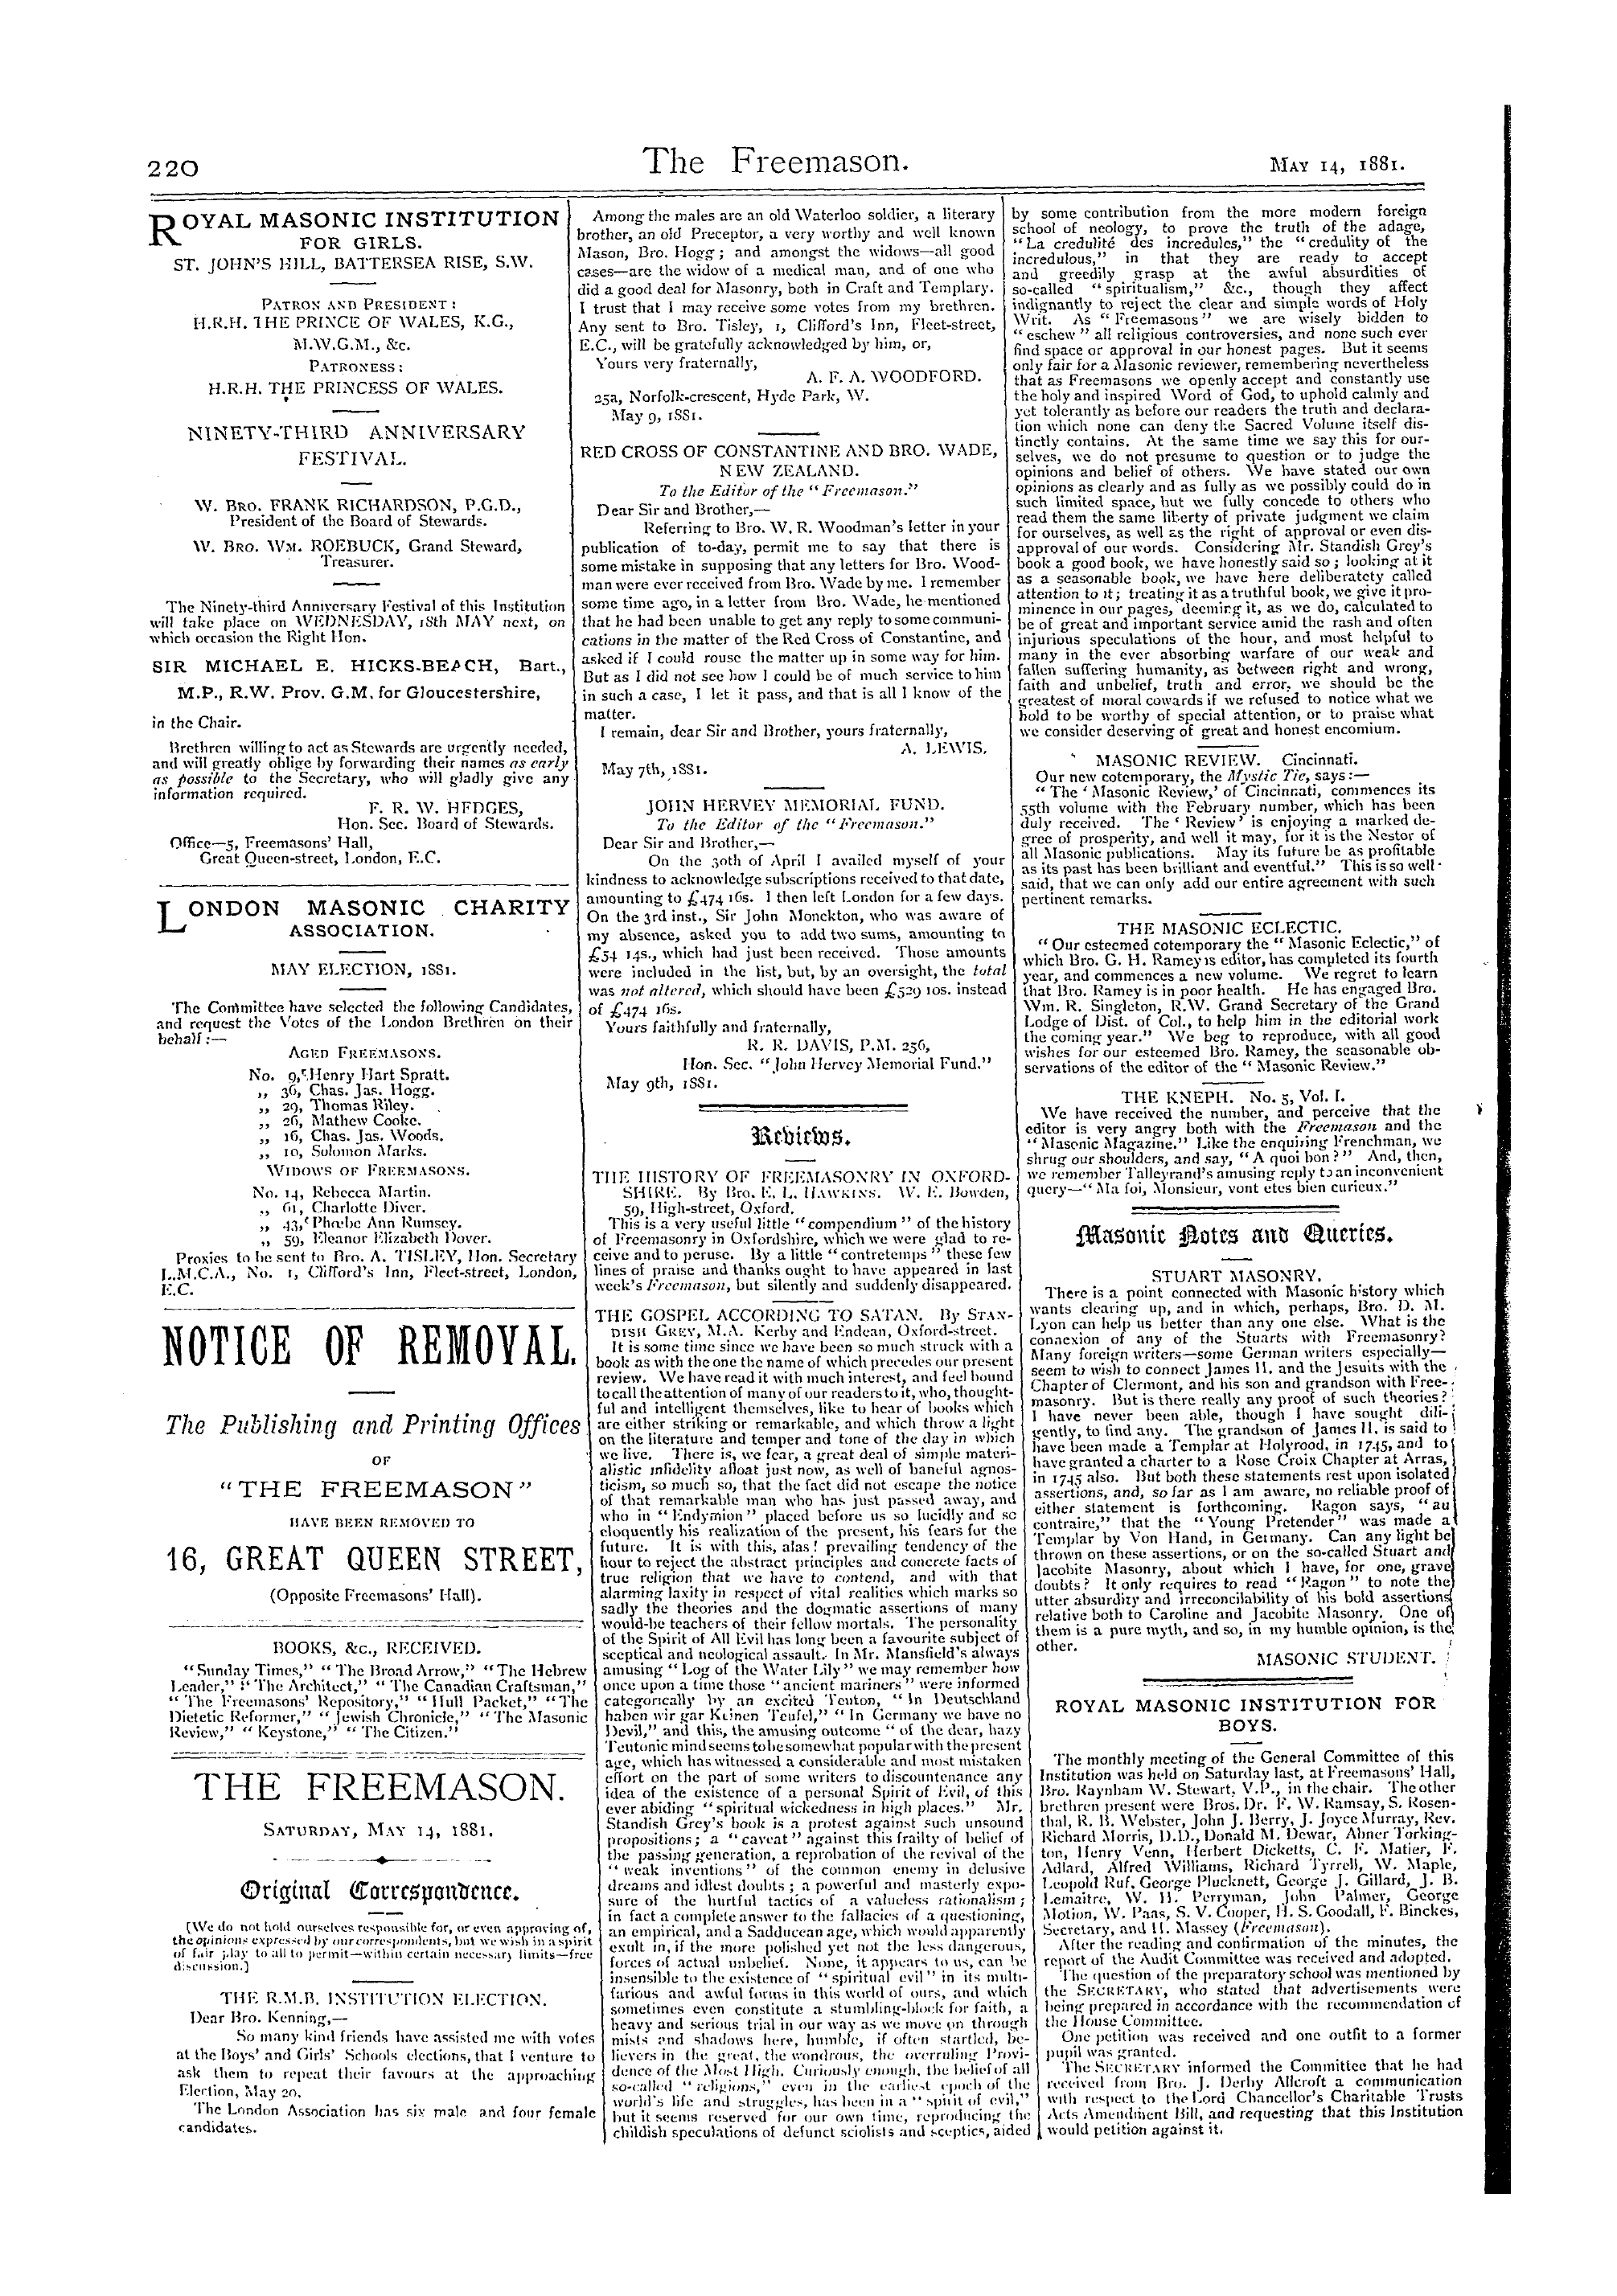 The Freemason: 1881-05-14 - Reviews.